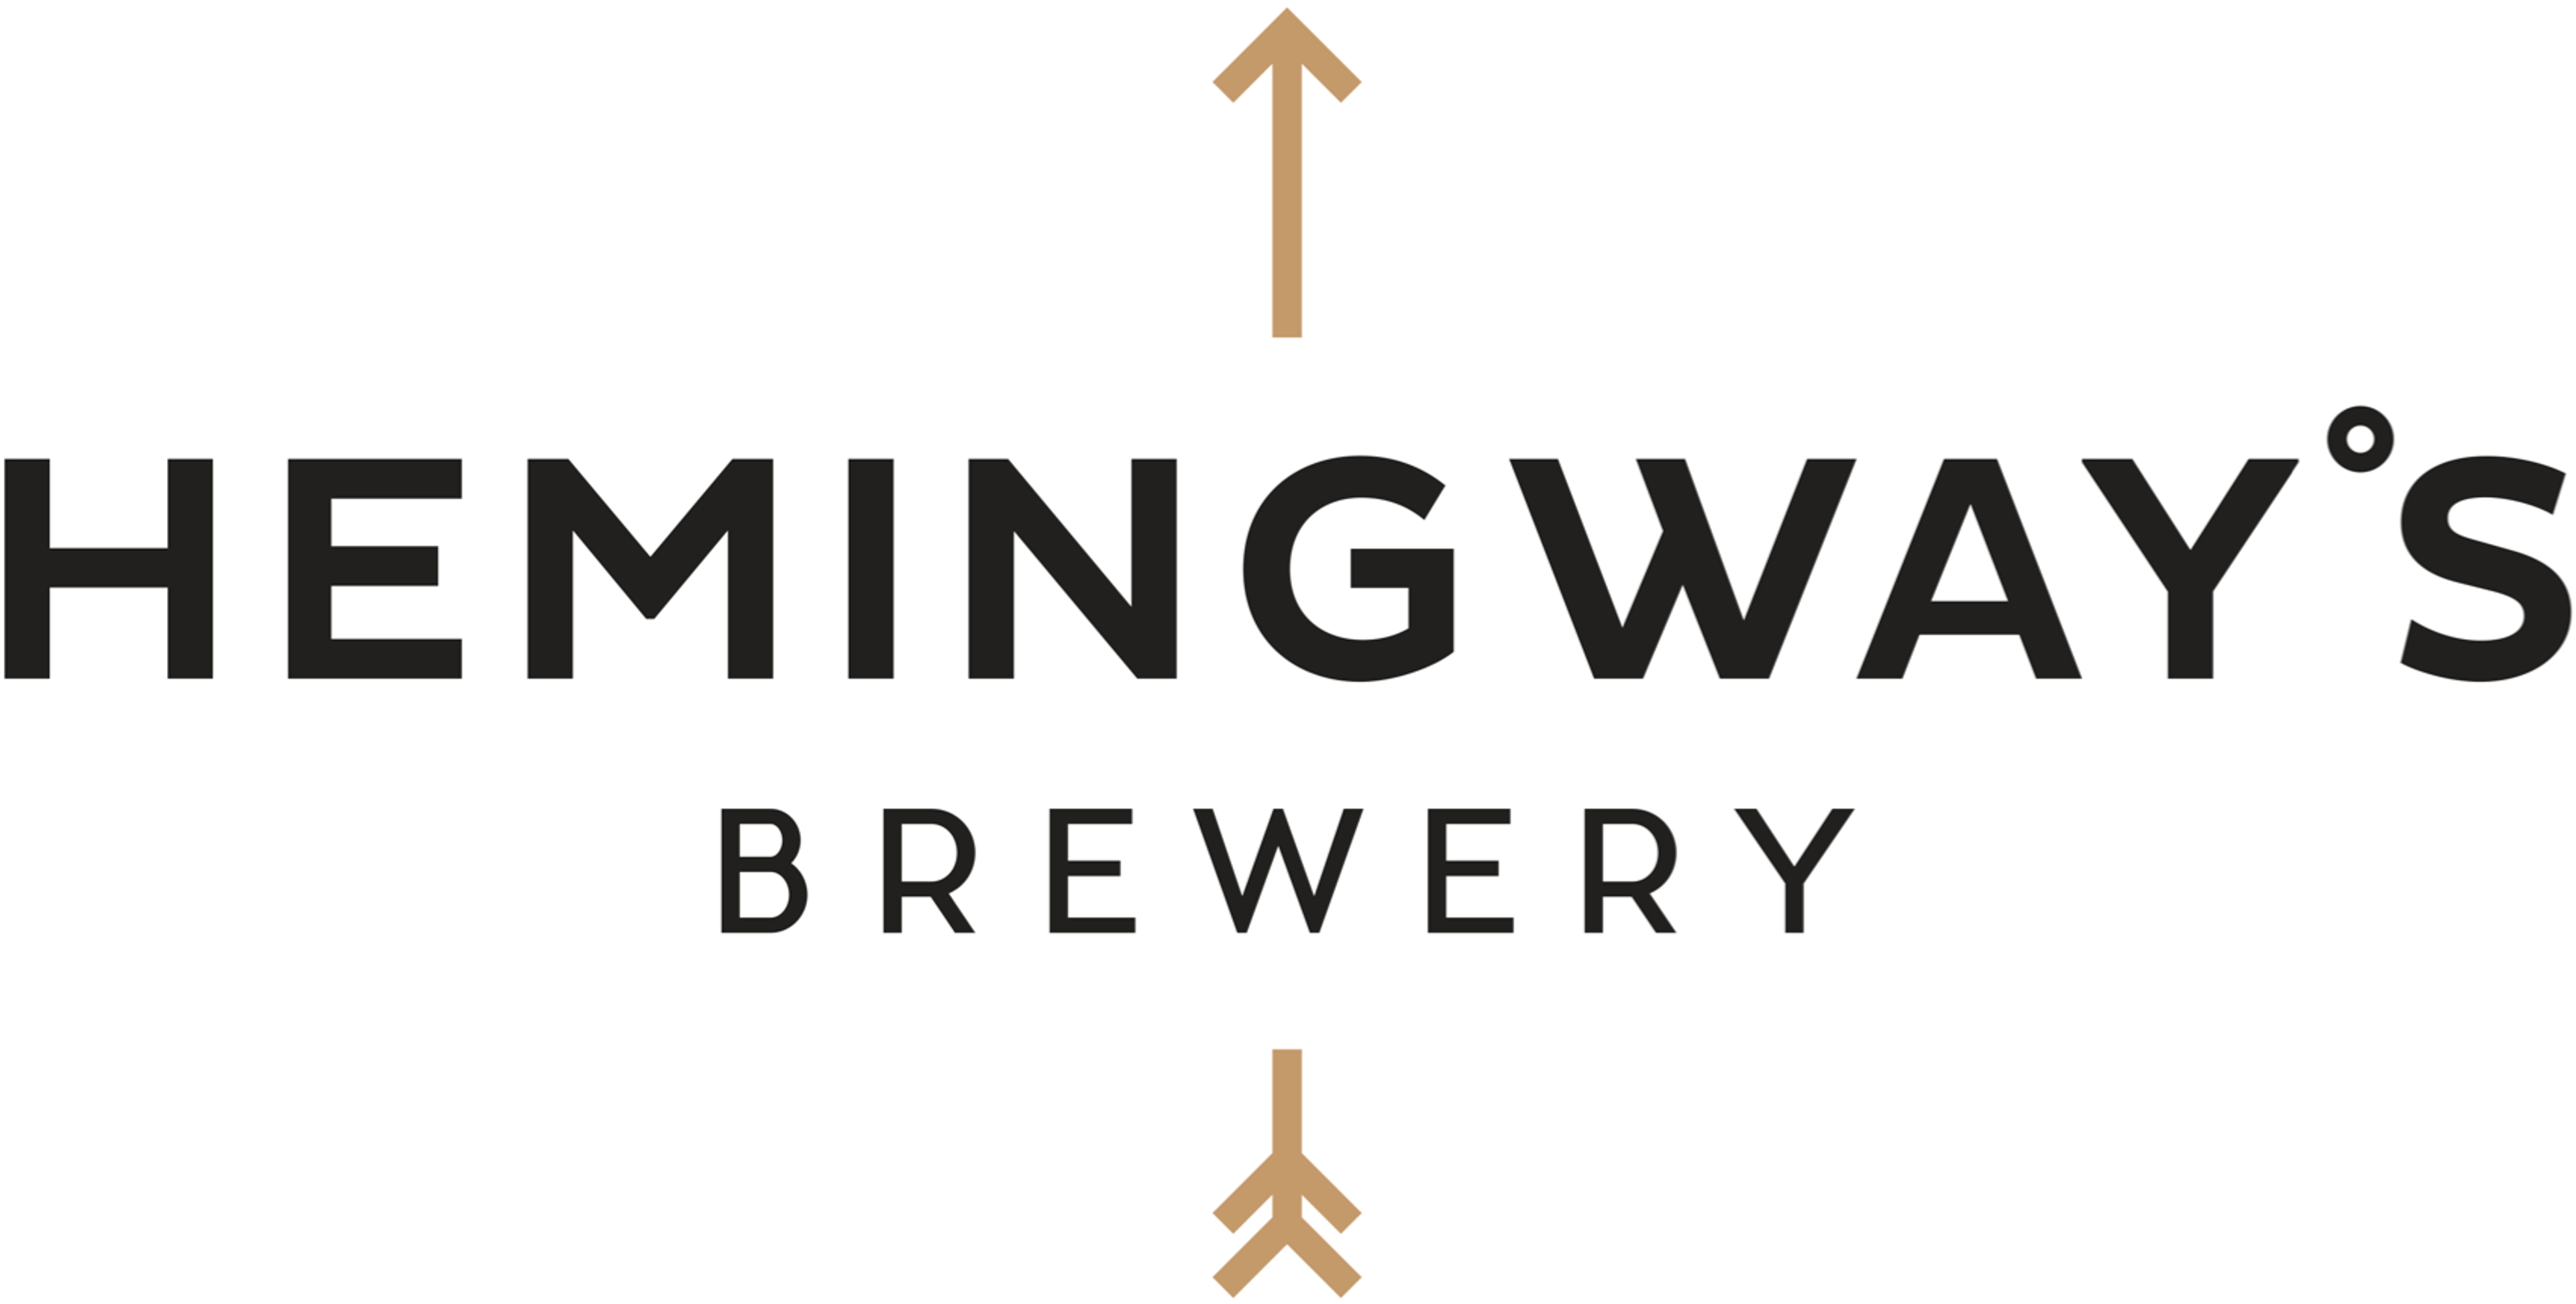 Hemingway's Brewery